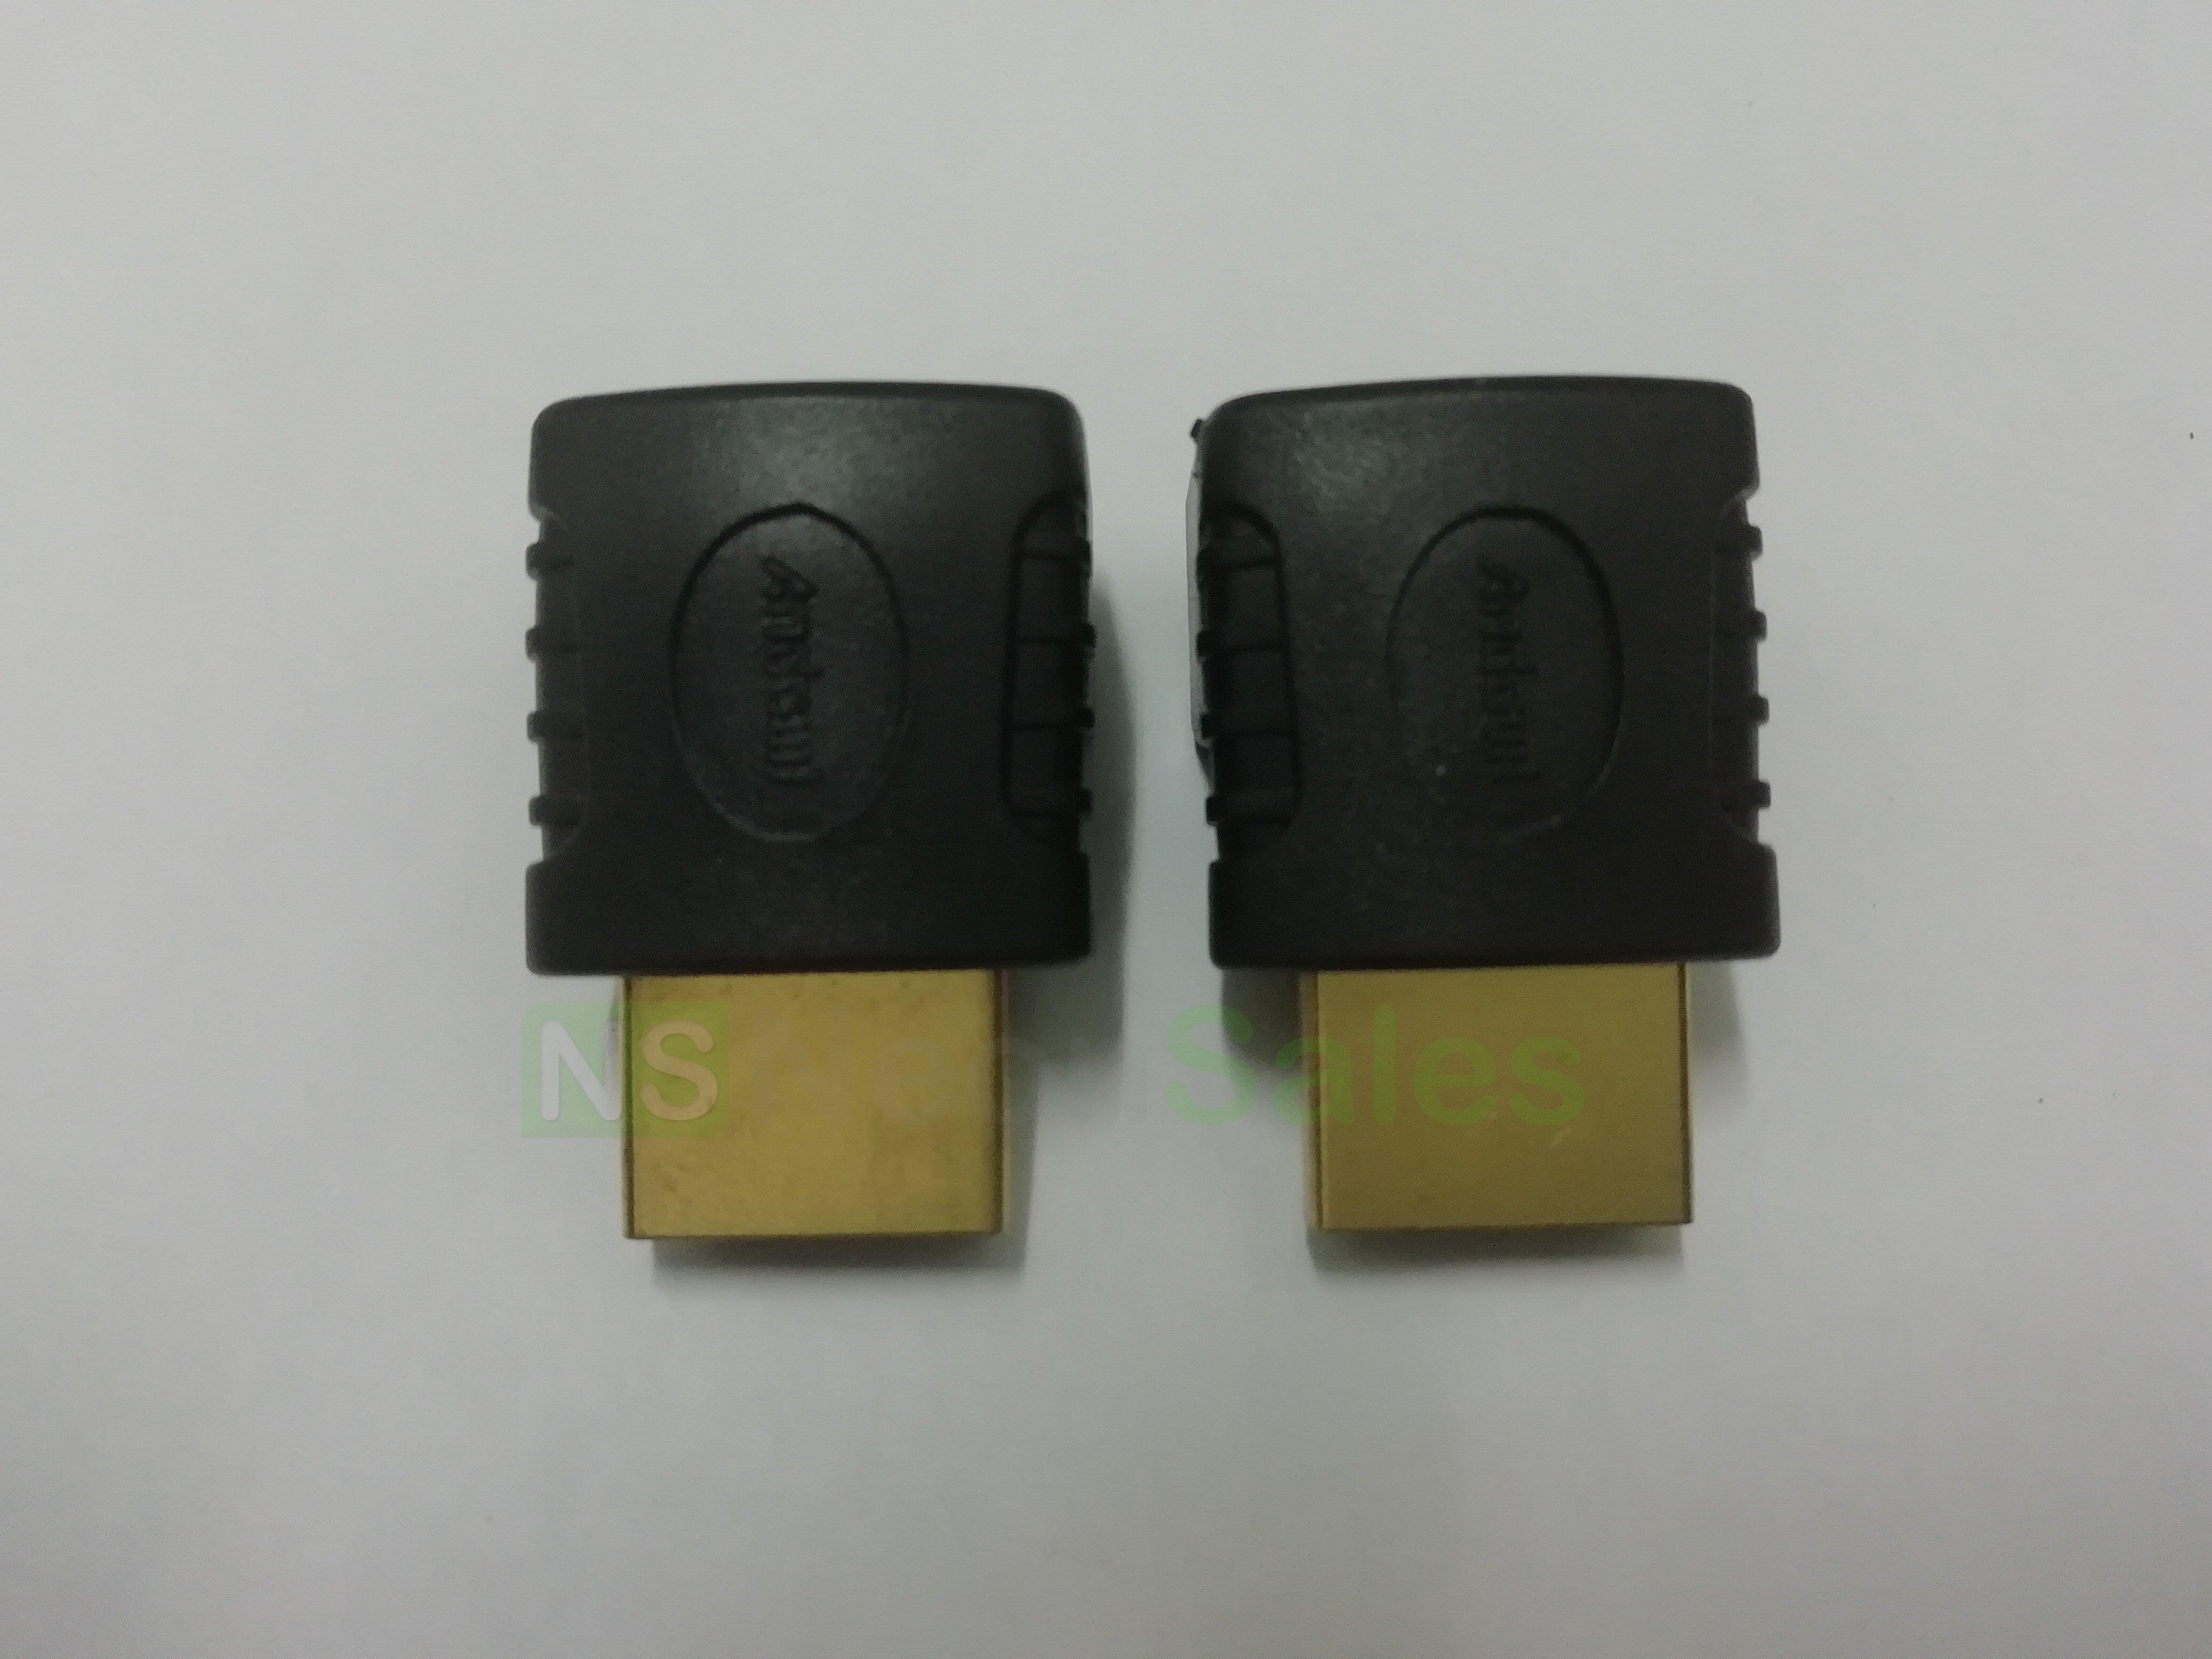 ANDOWL RIGHT ANGLE HDMI ADAPTER Q-JC15 - NeonSales